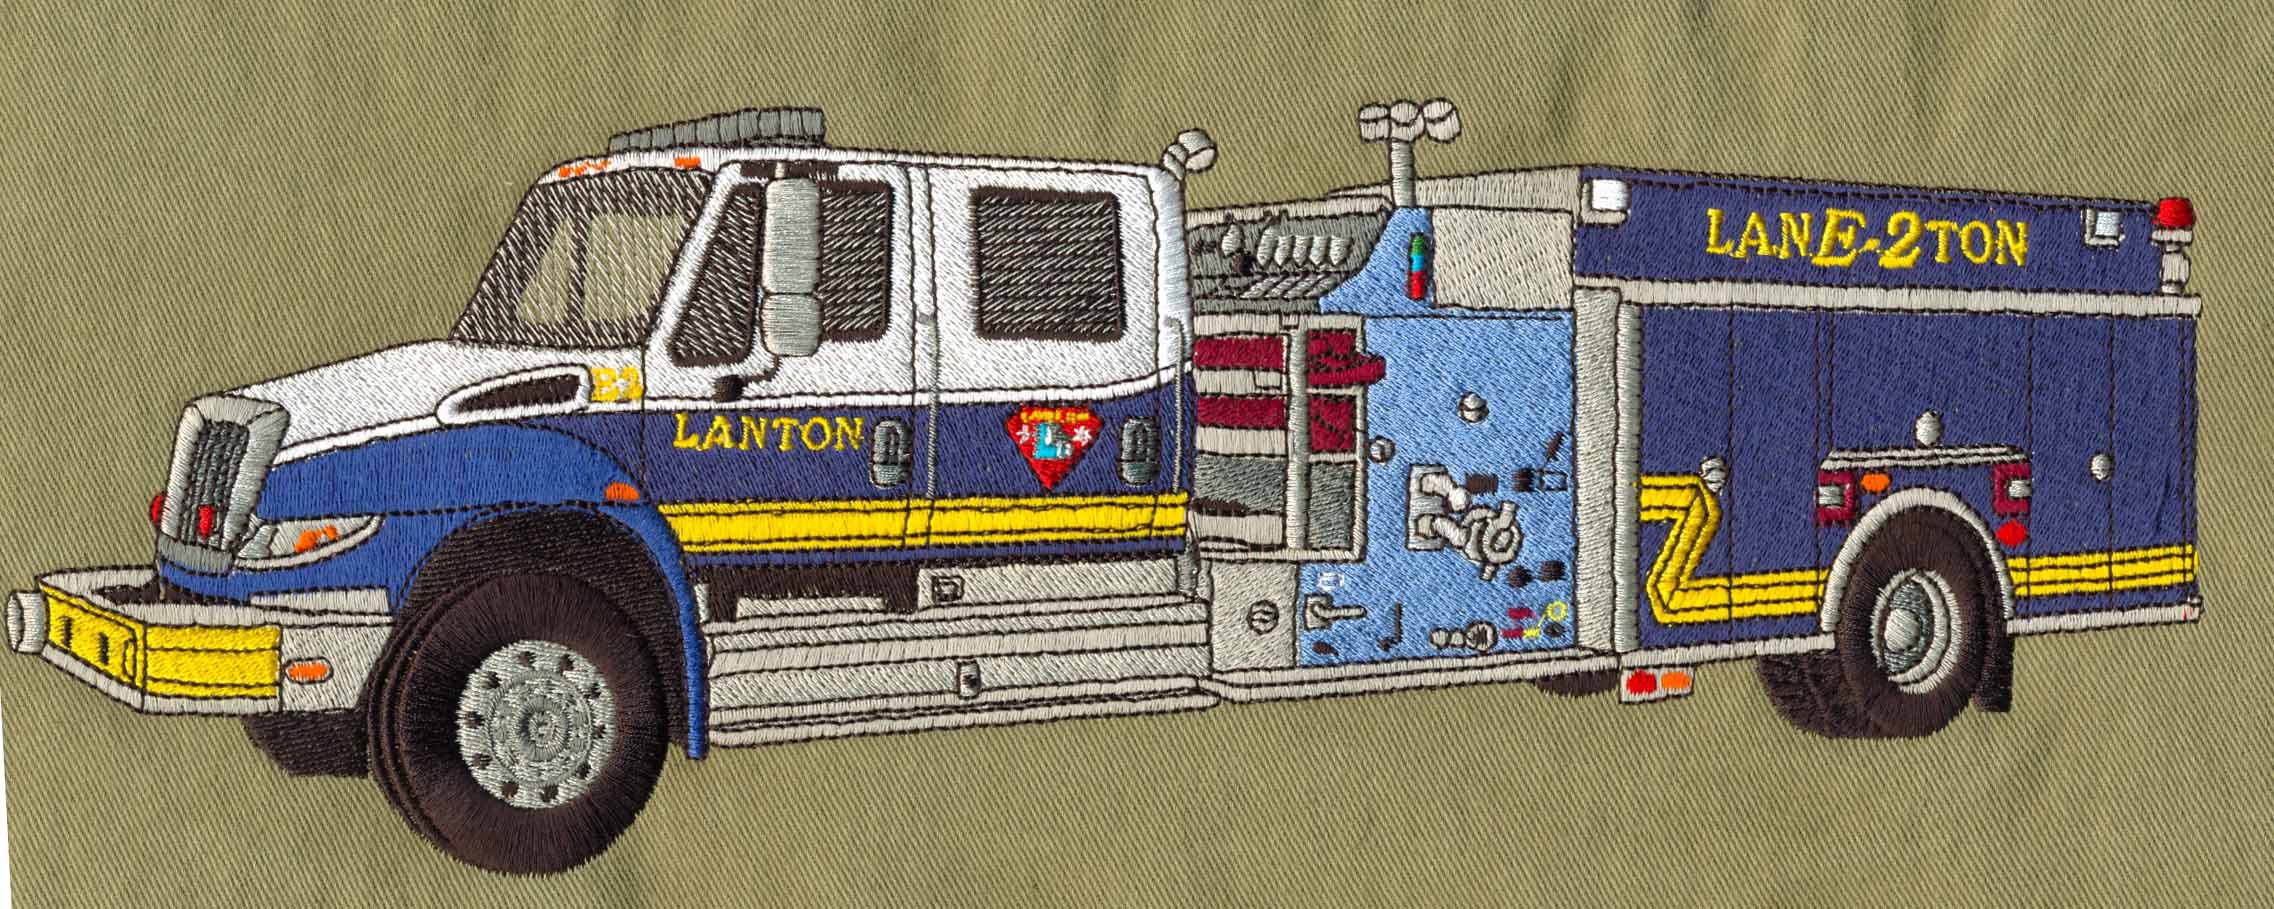 EMT Lanton trucks of FDIC Fire Department for Jacket Back of Indianapolis firemen